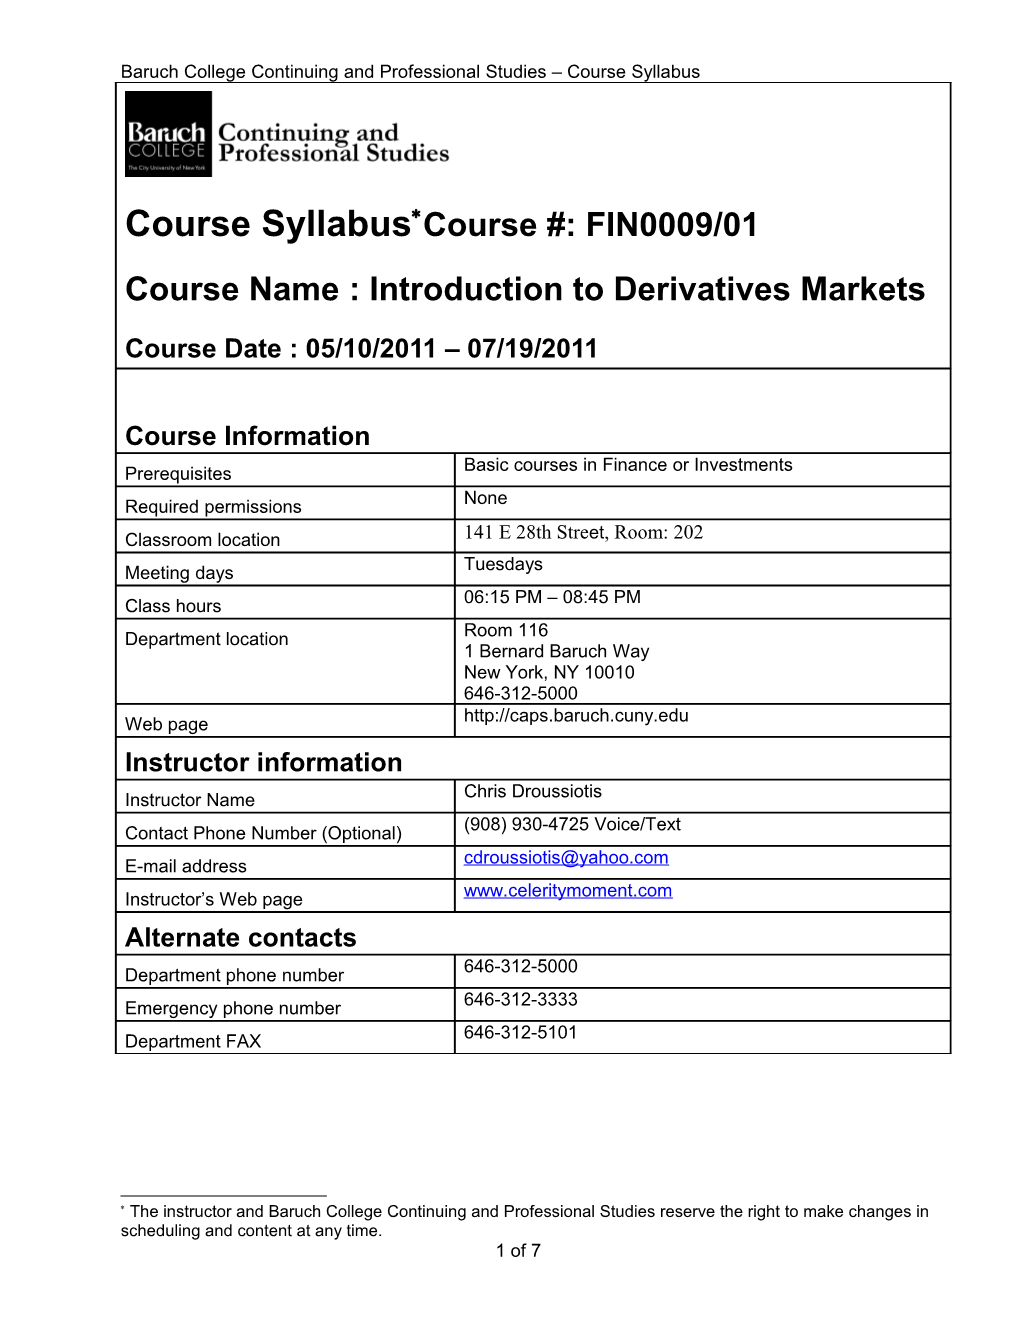 Baruchcollege Continuing and Professional Studies Course Syllabus